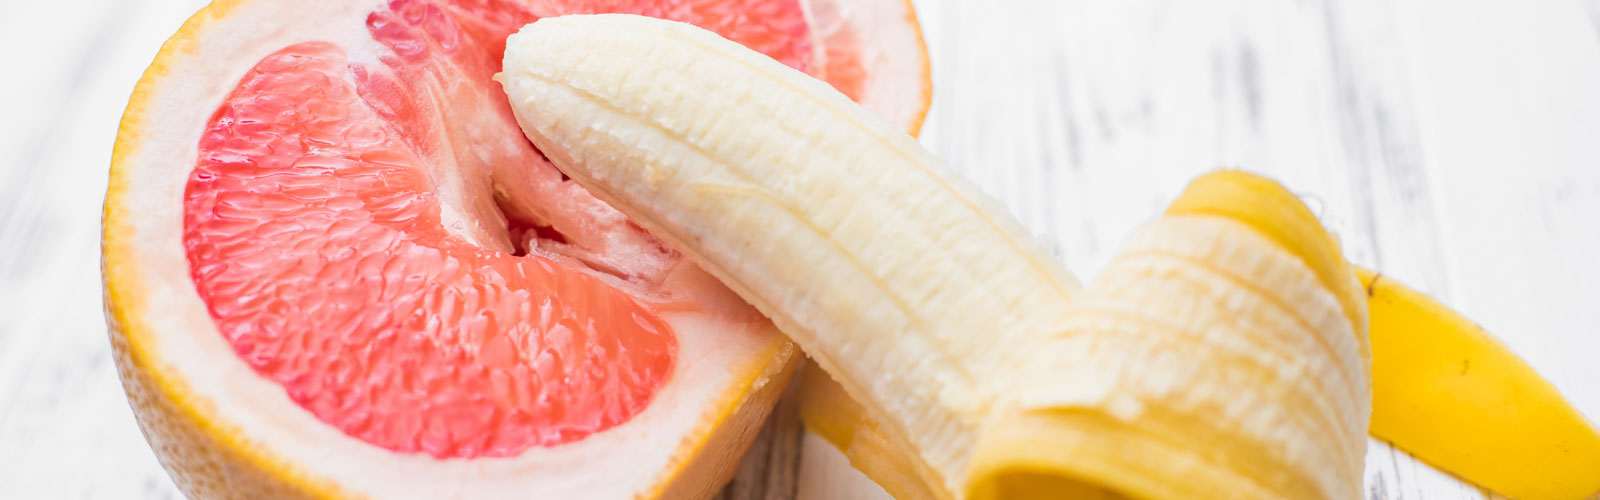 Banana over citrus fruit cut in half